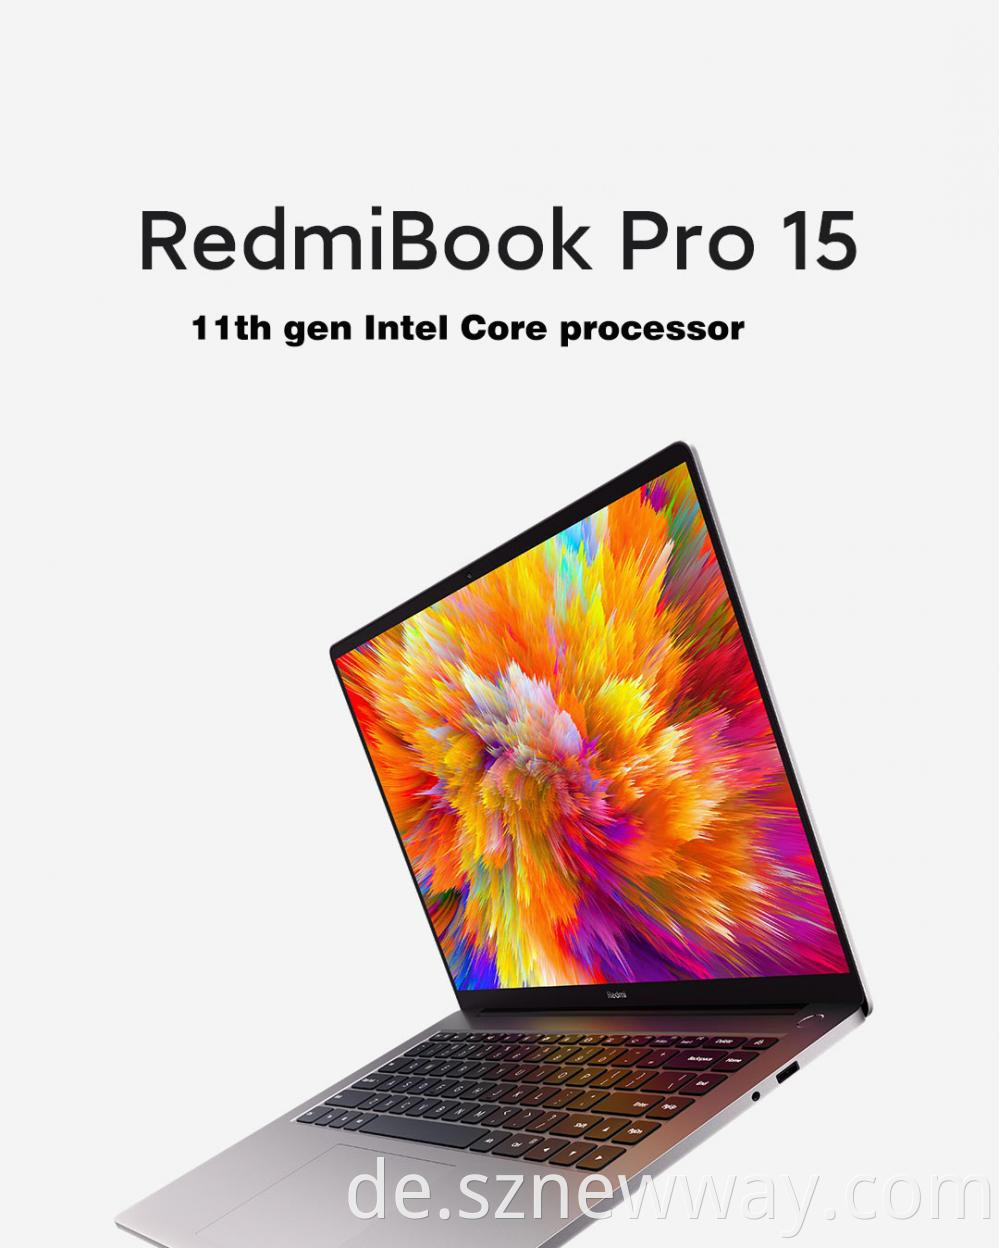 Redmibook Pro 15